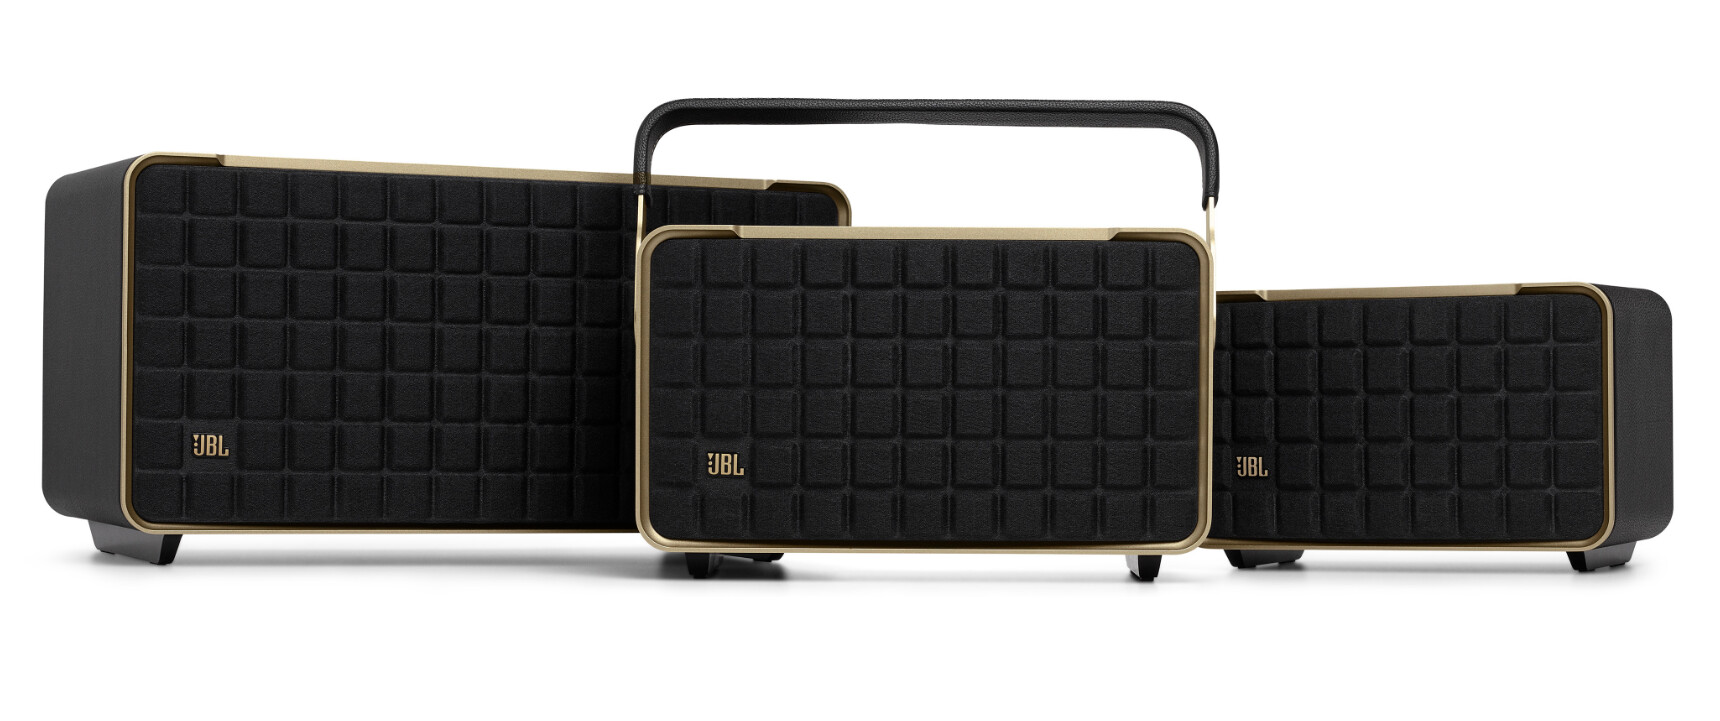 JBL Announces the Authentics Series of Portable Speakers